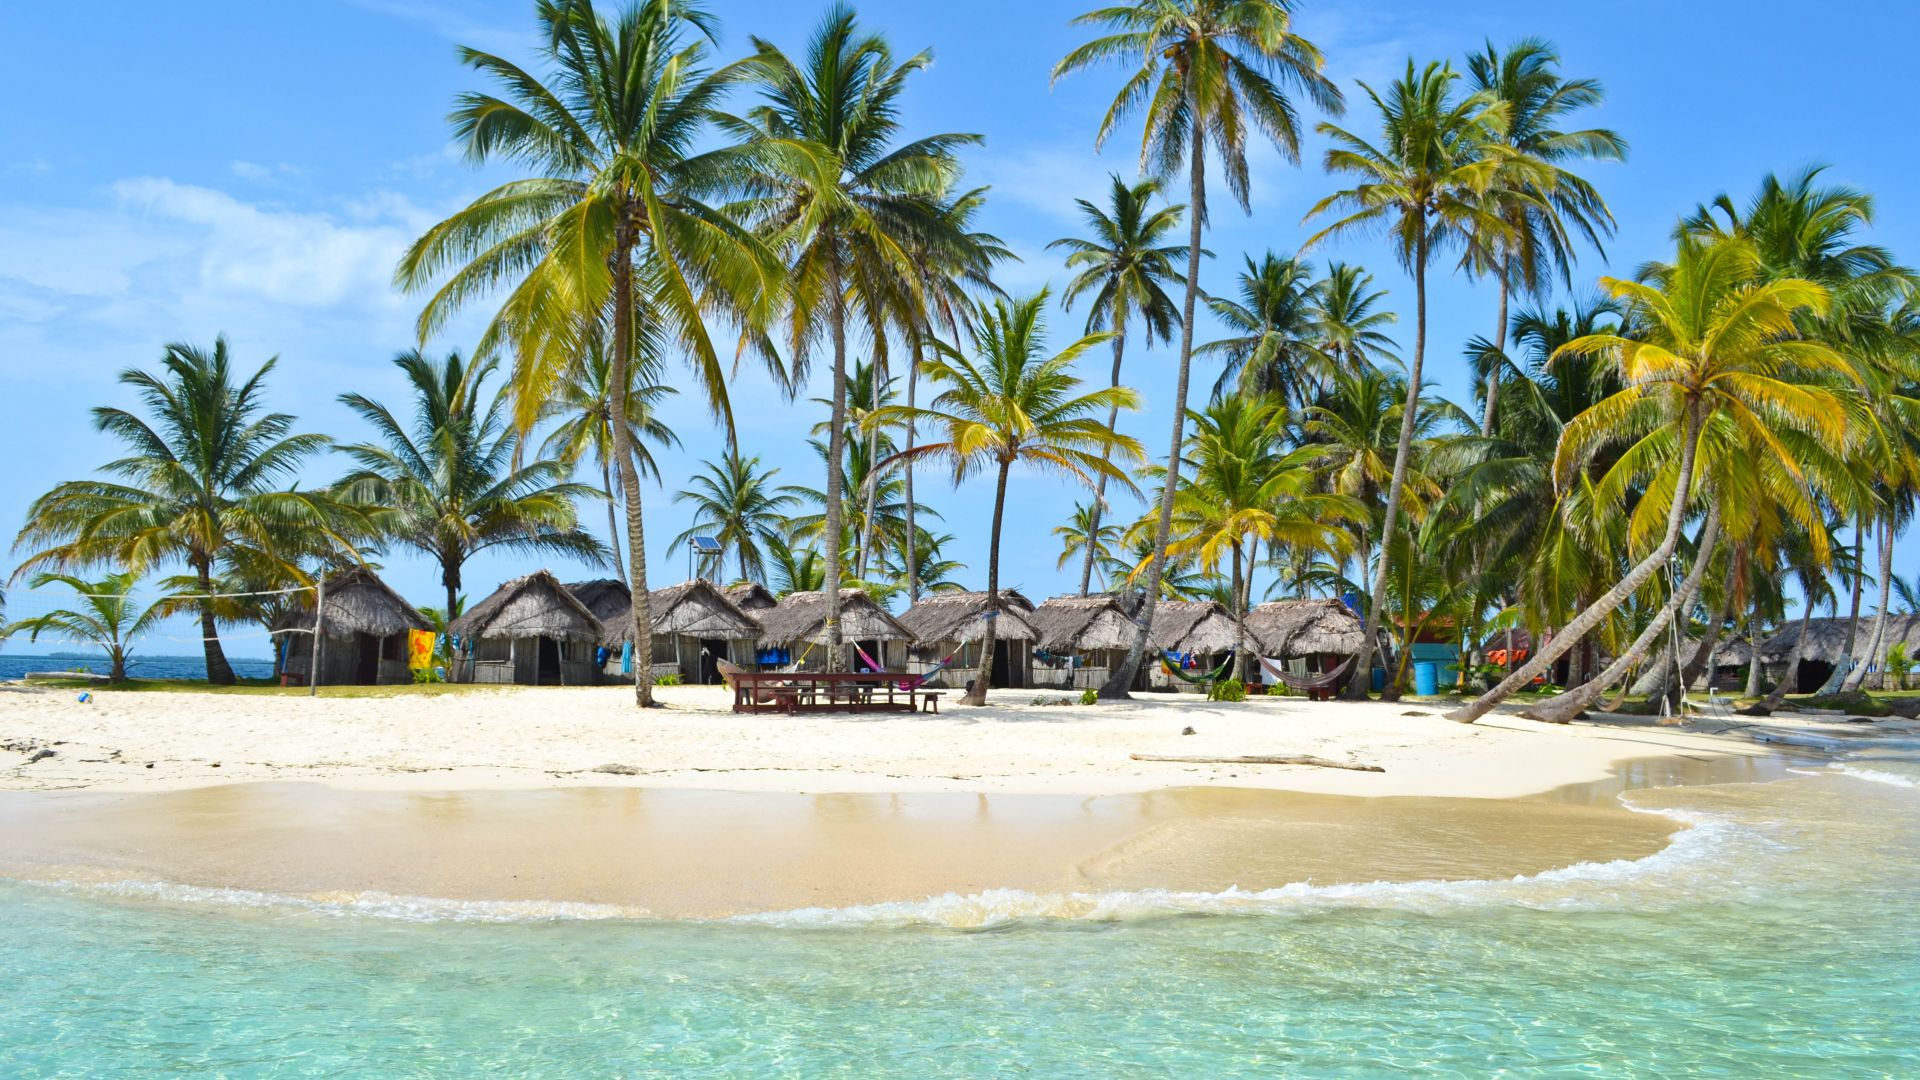 Maldives, 4k, 5k wallpaper, Indian Ocean, Best Beaches in the World, palms, shore, sky (horizontal)